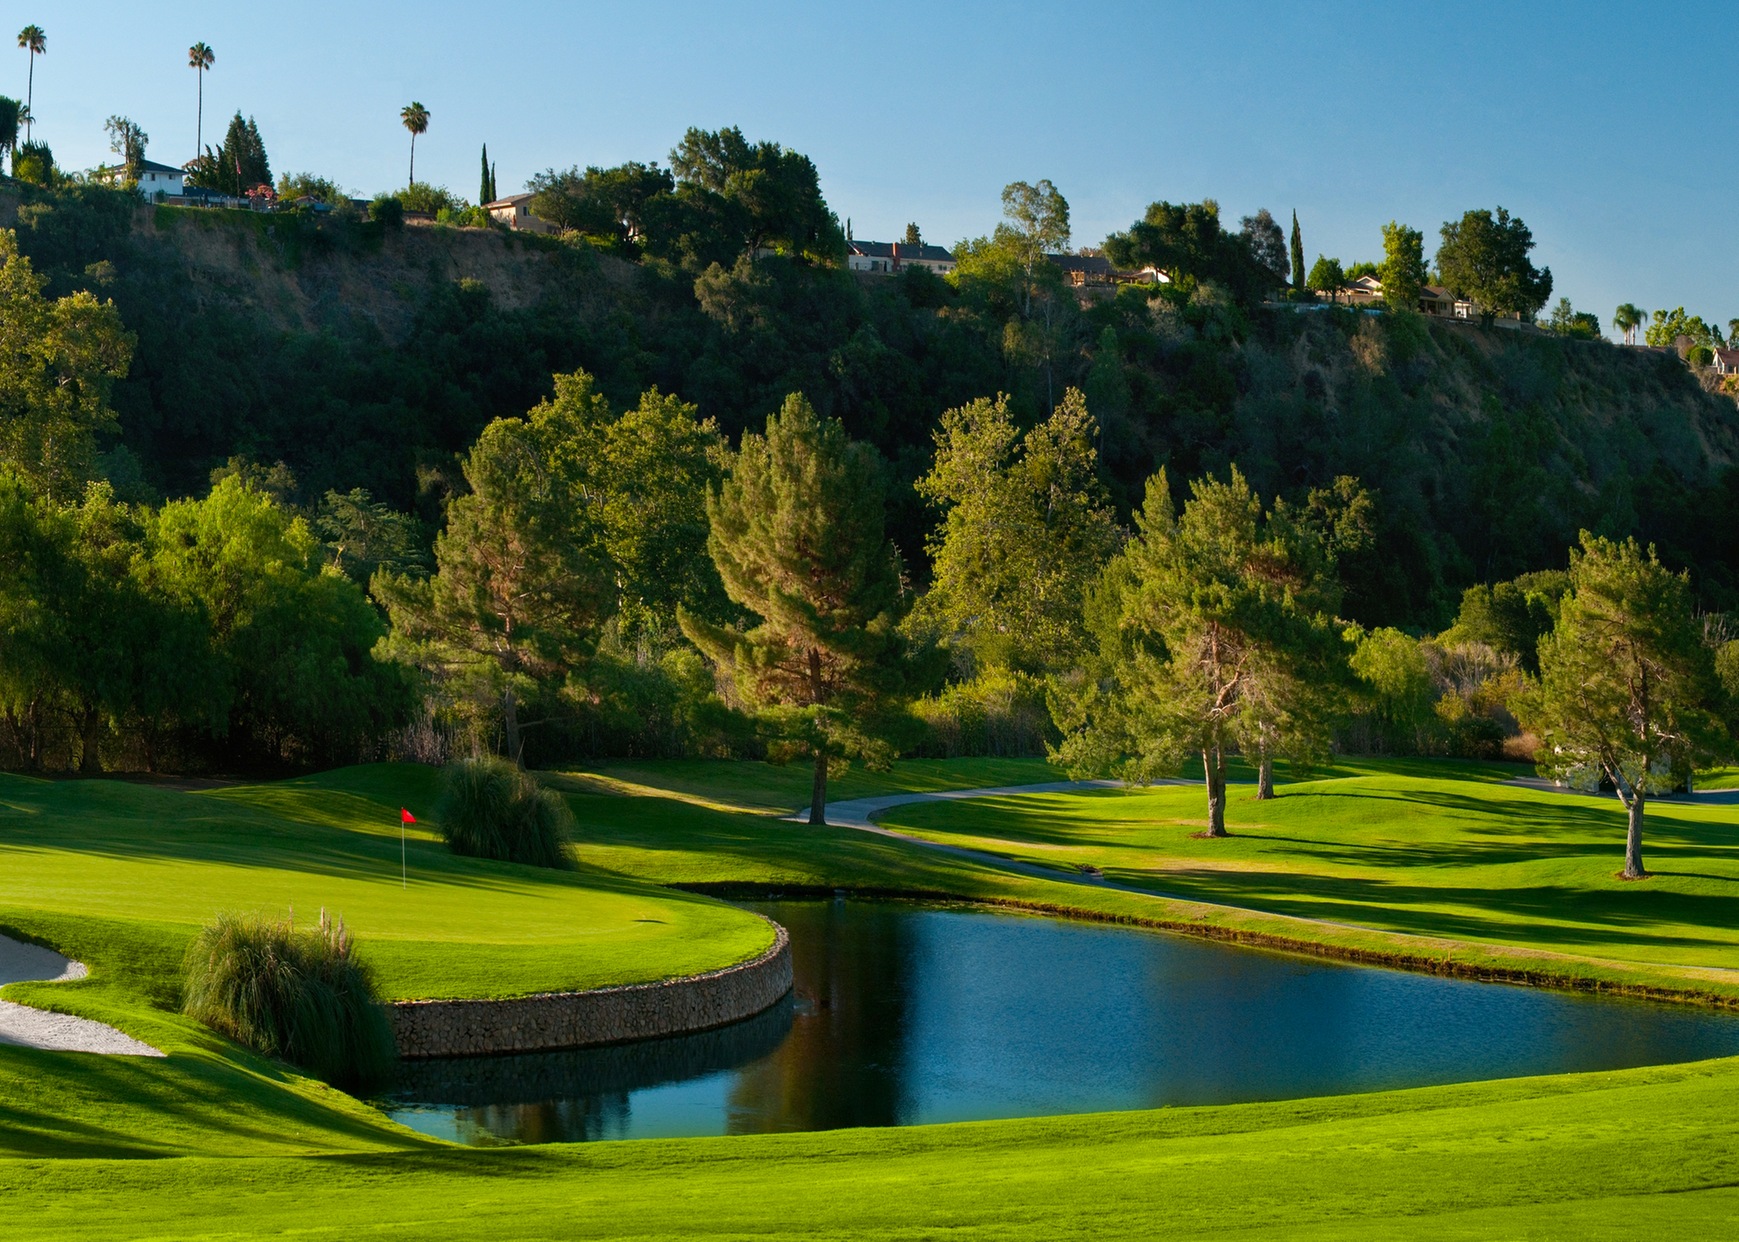 San Dimas Canyon Golf Course's signature 16th hole. Image: Southern California Golf Association